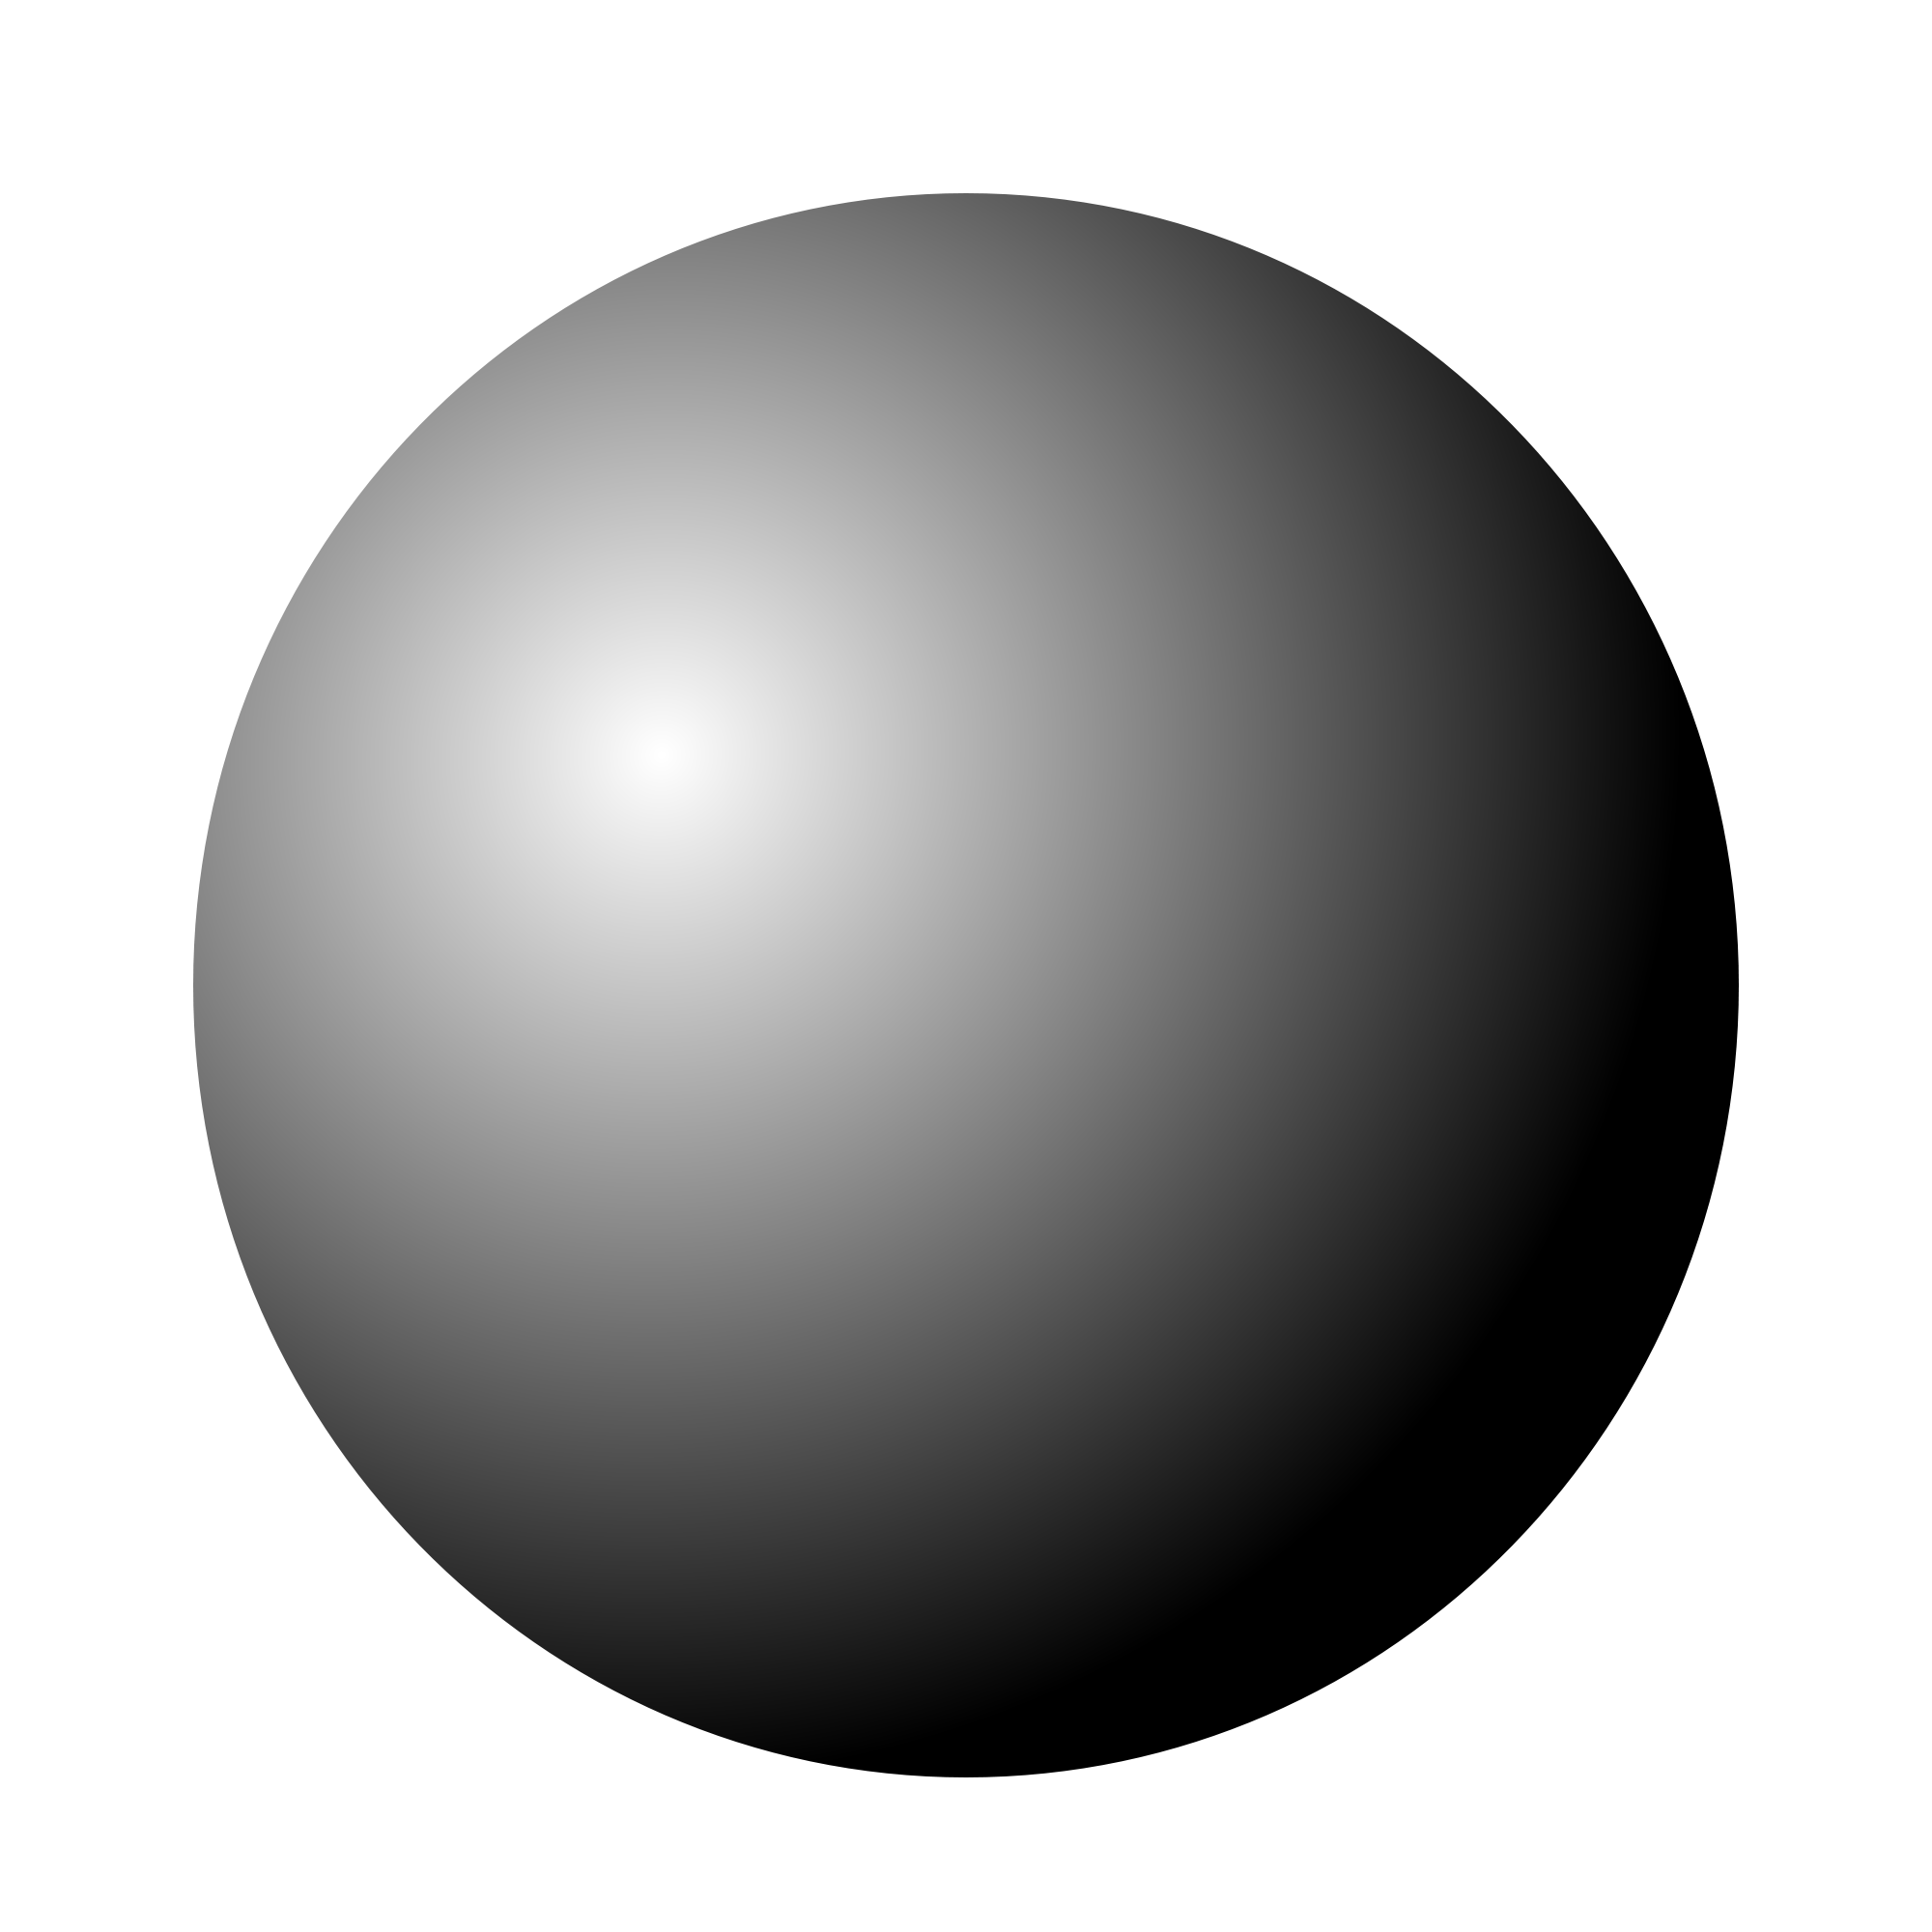 File:Sphere - monochrome simple.svg - Wikimedia Commons